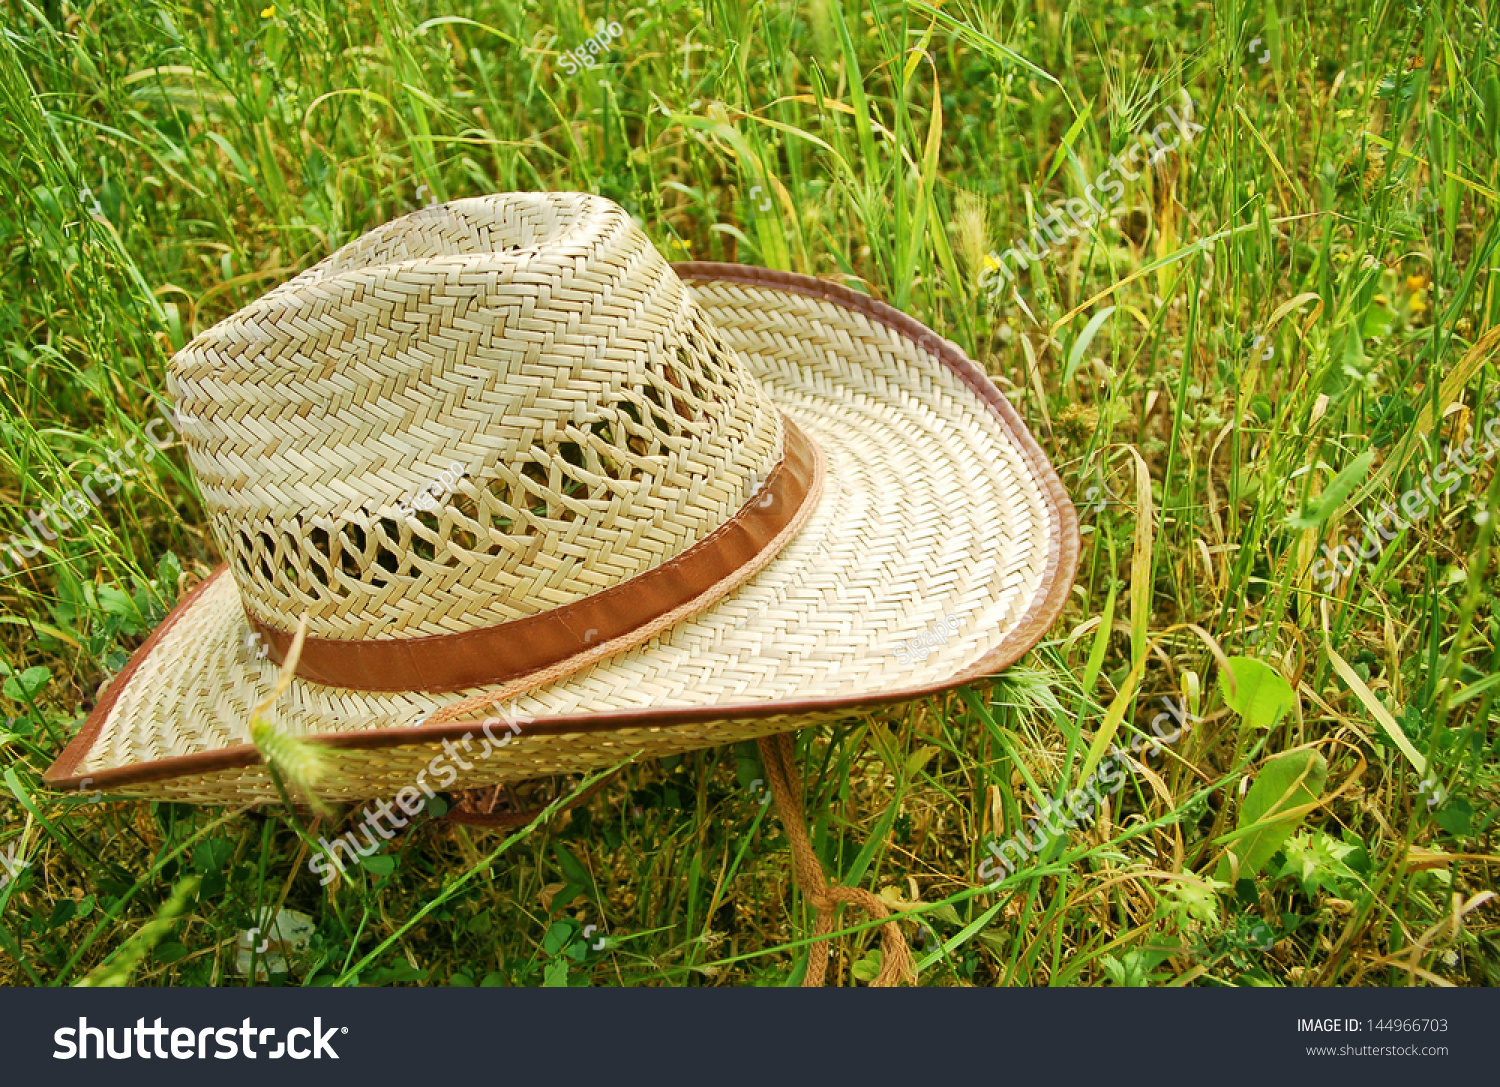 Cowboy Hat On Green Grass Stock Photo 144966703 : Shutterstock